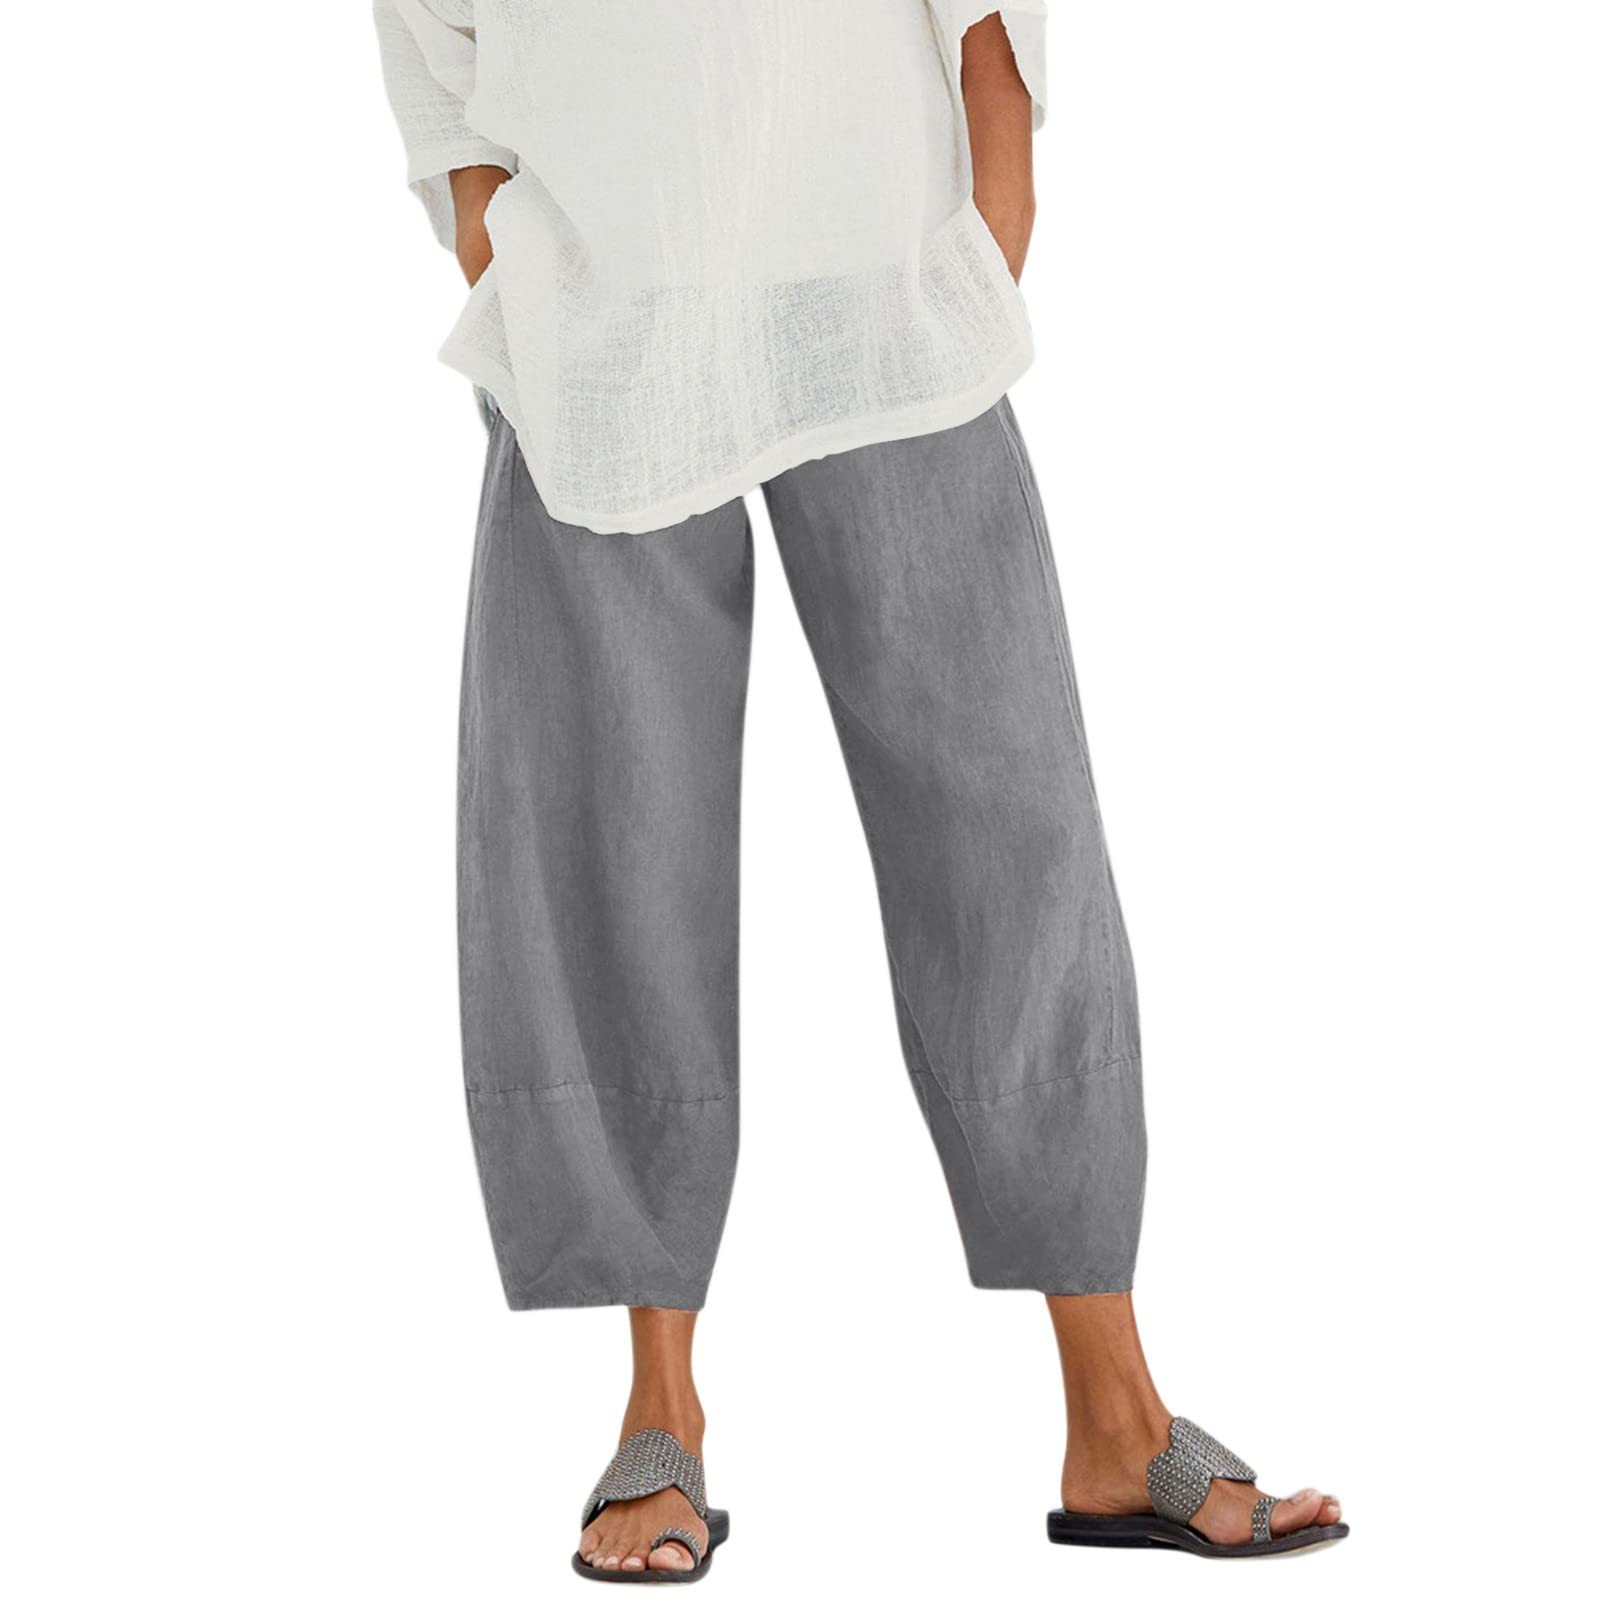 Linen Palazzo Pants for Women,Women's Casual Summer Capri Pants Cotton Linen  Print Wide Leg Ankle Pants with Pockets W08-grey X-Large